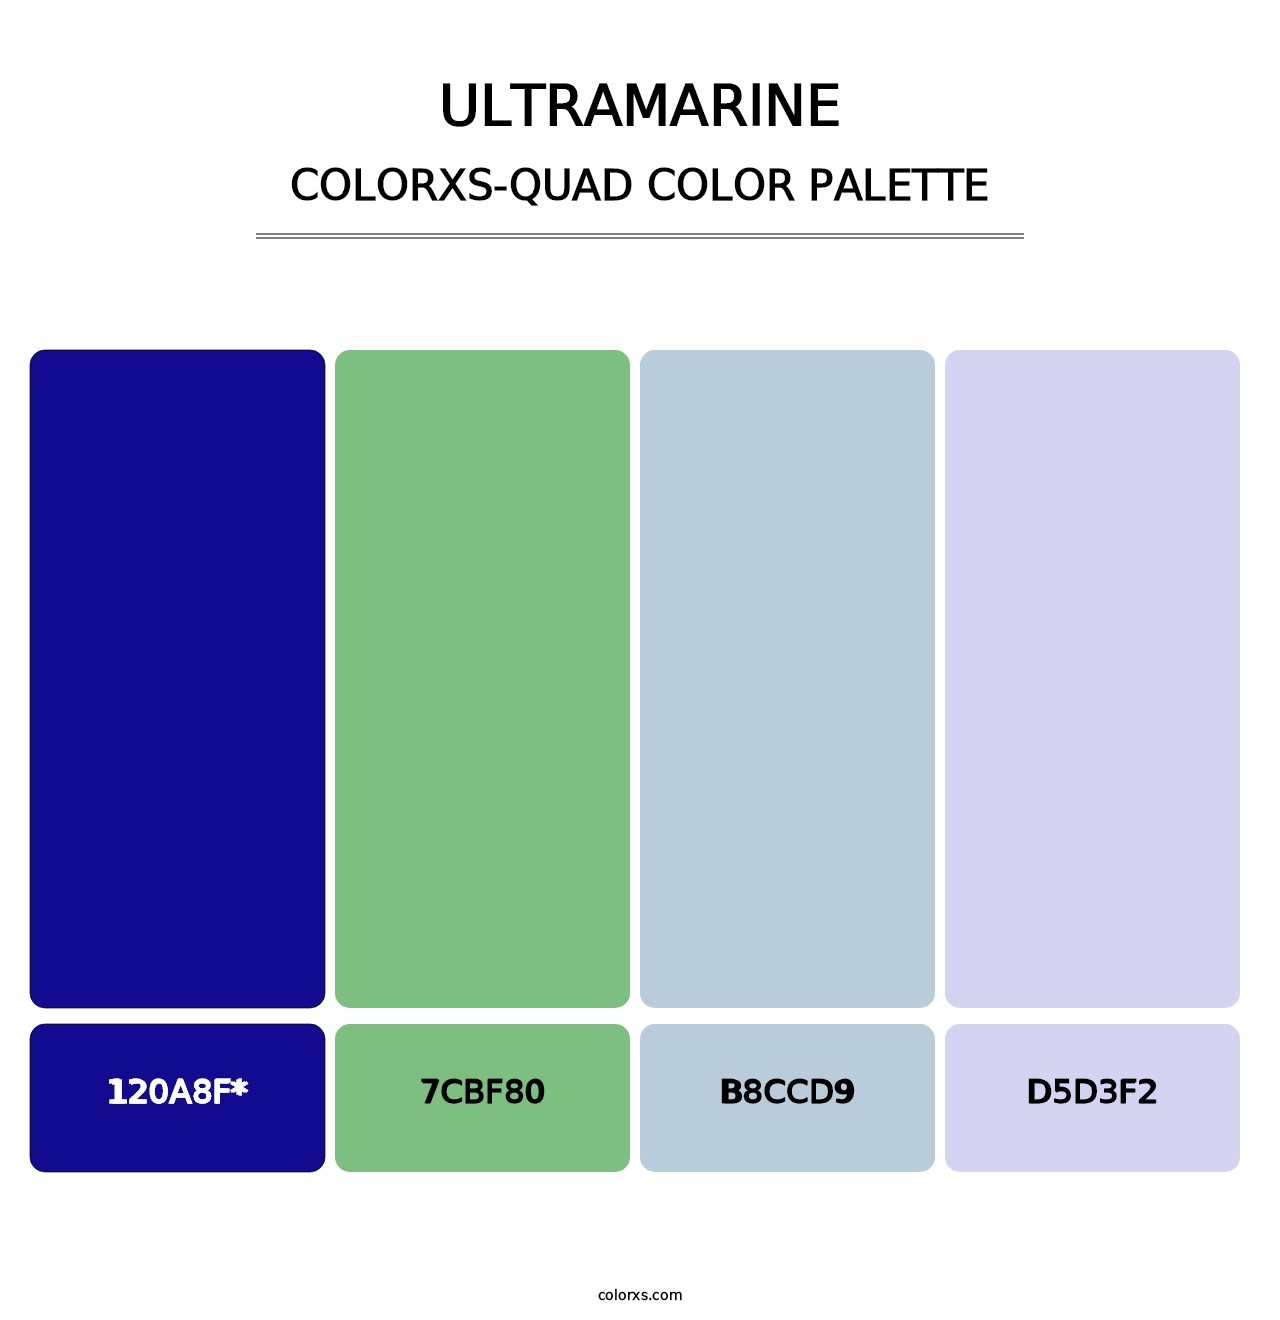 Ultramarine - Colorxs Quad Palette